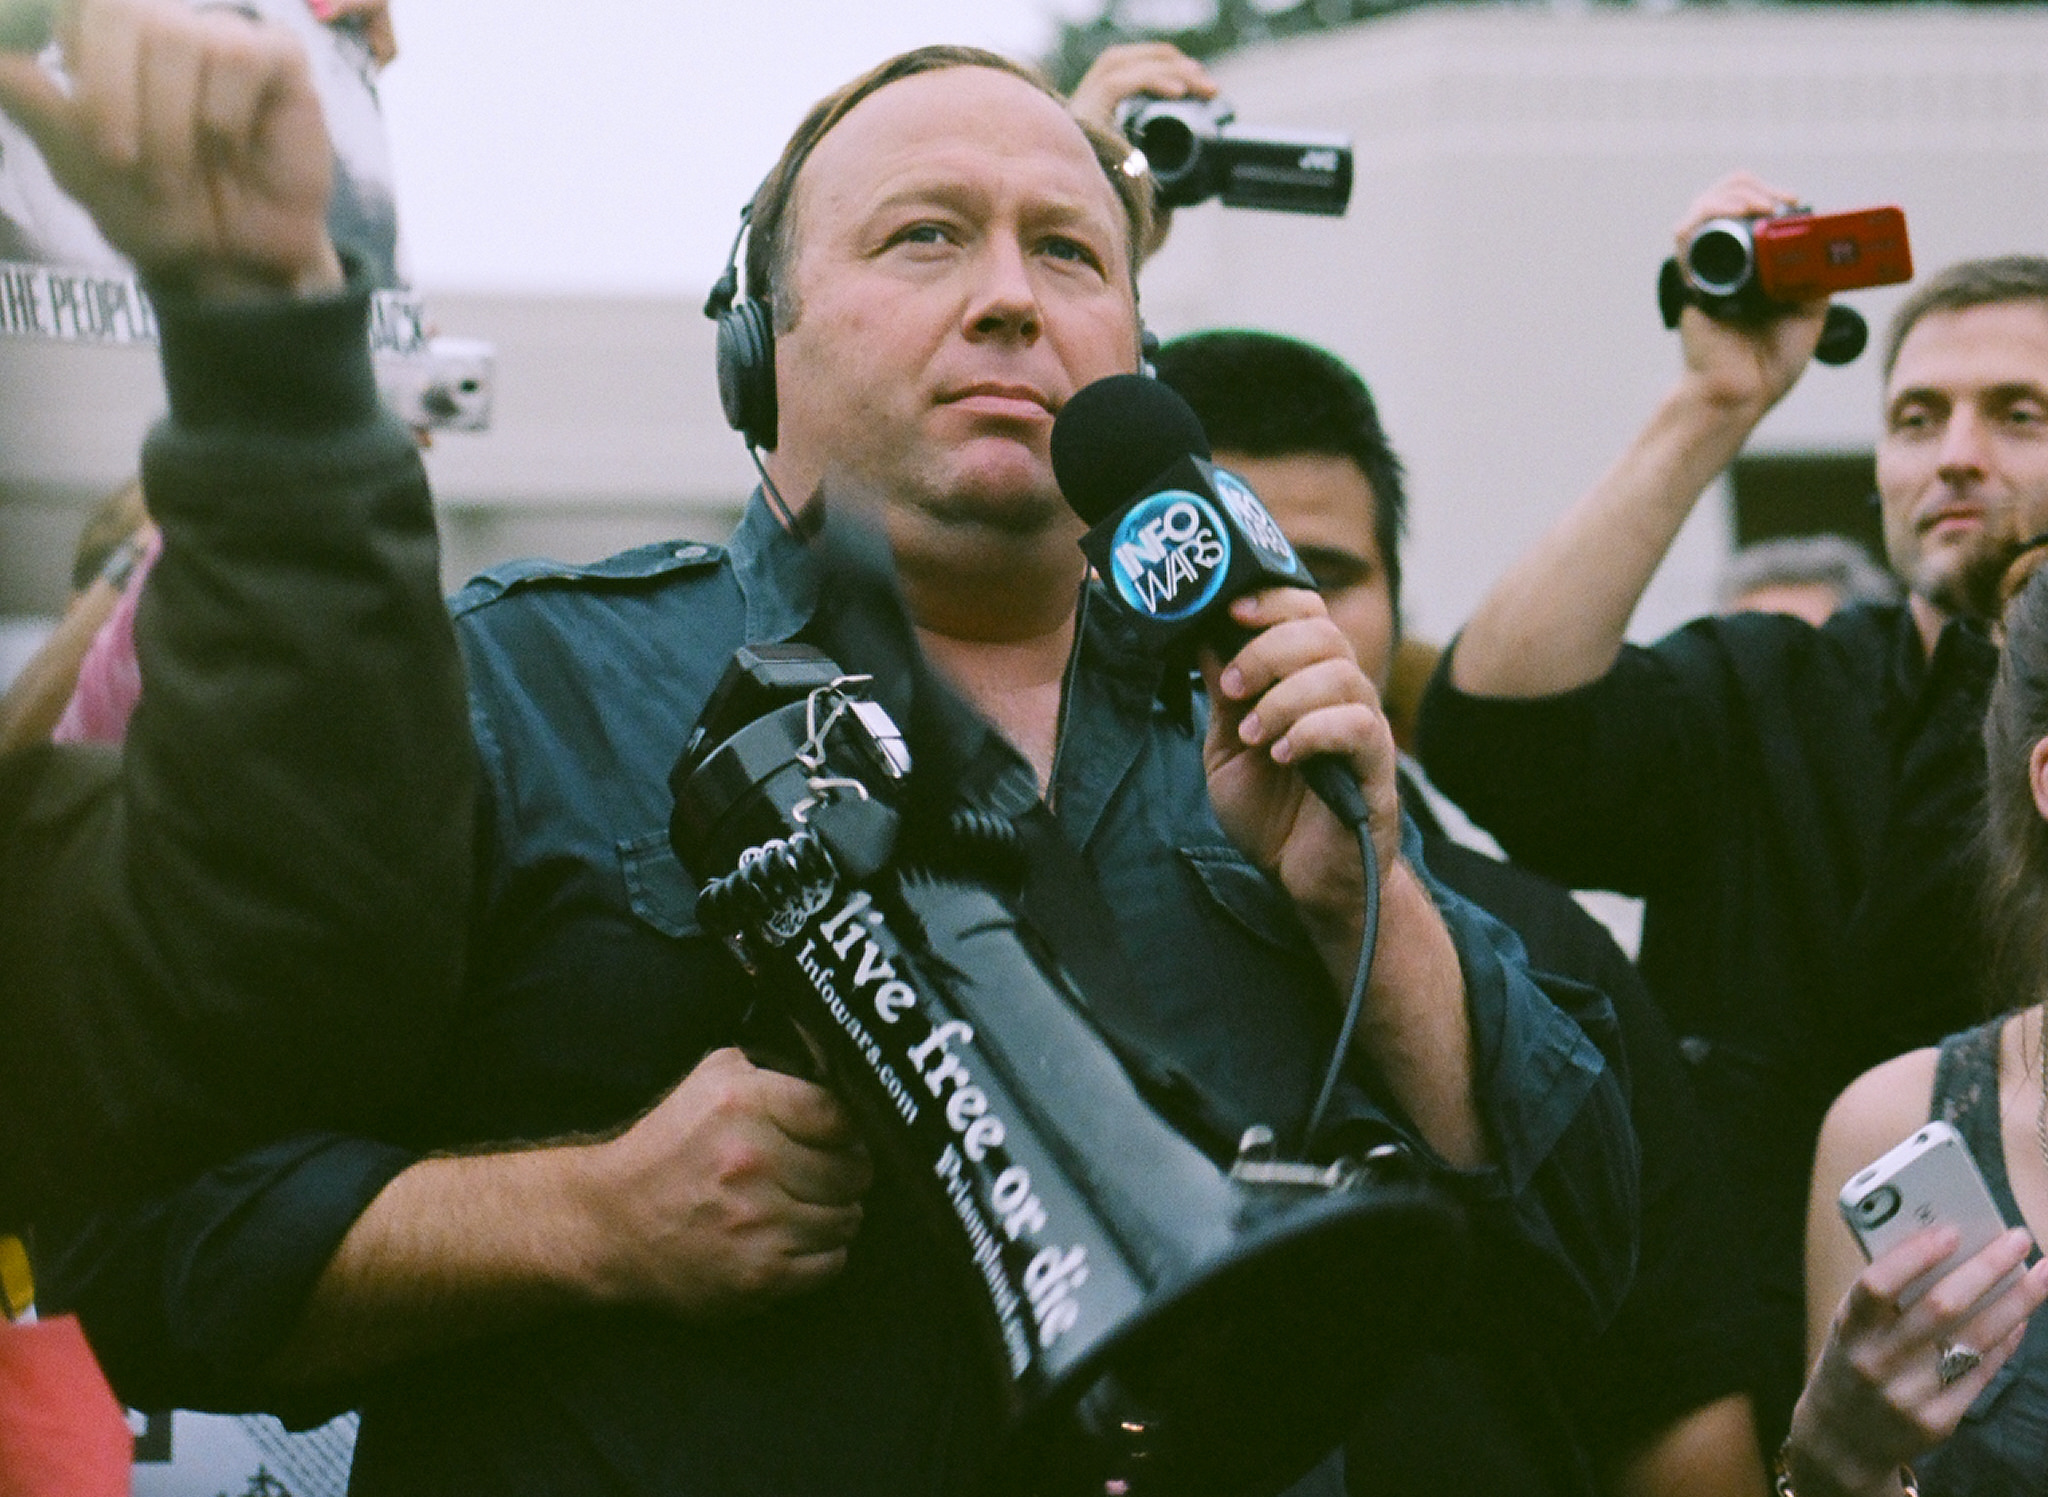 Mann med mikrofon og megafon. På megafonen står det "live free or die". Foto.